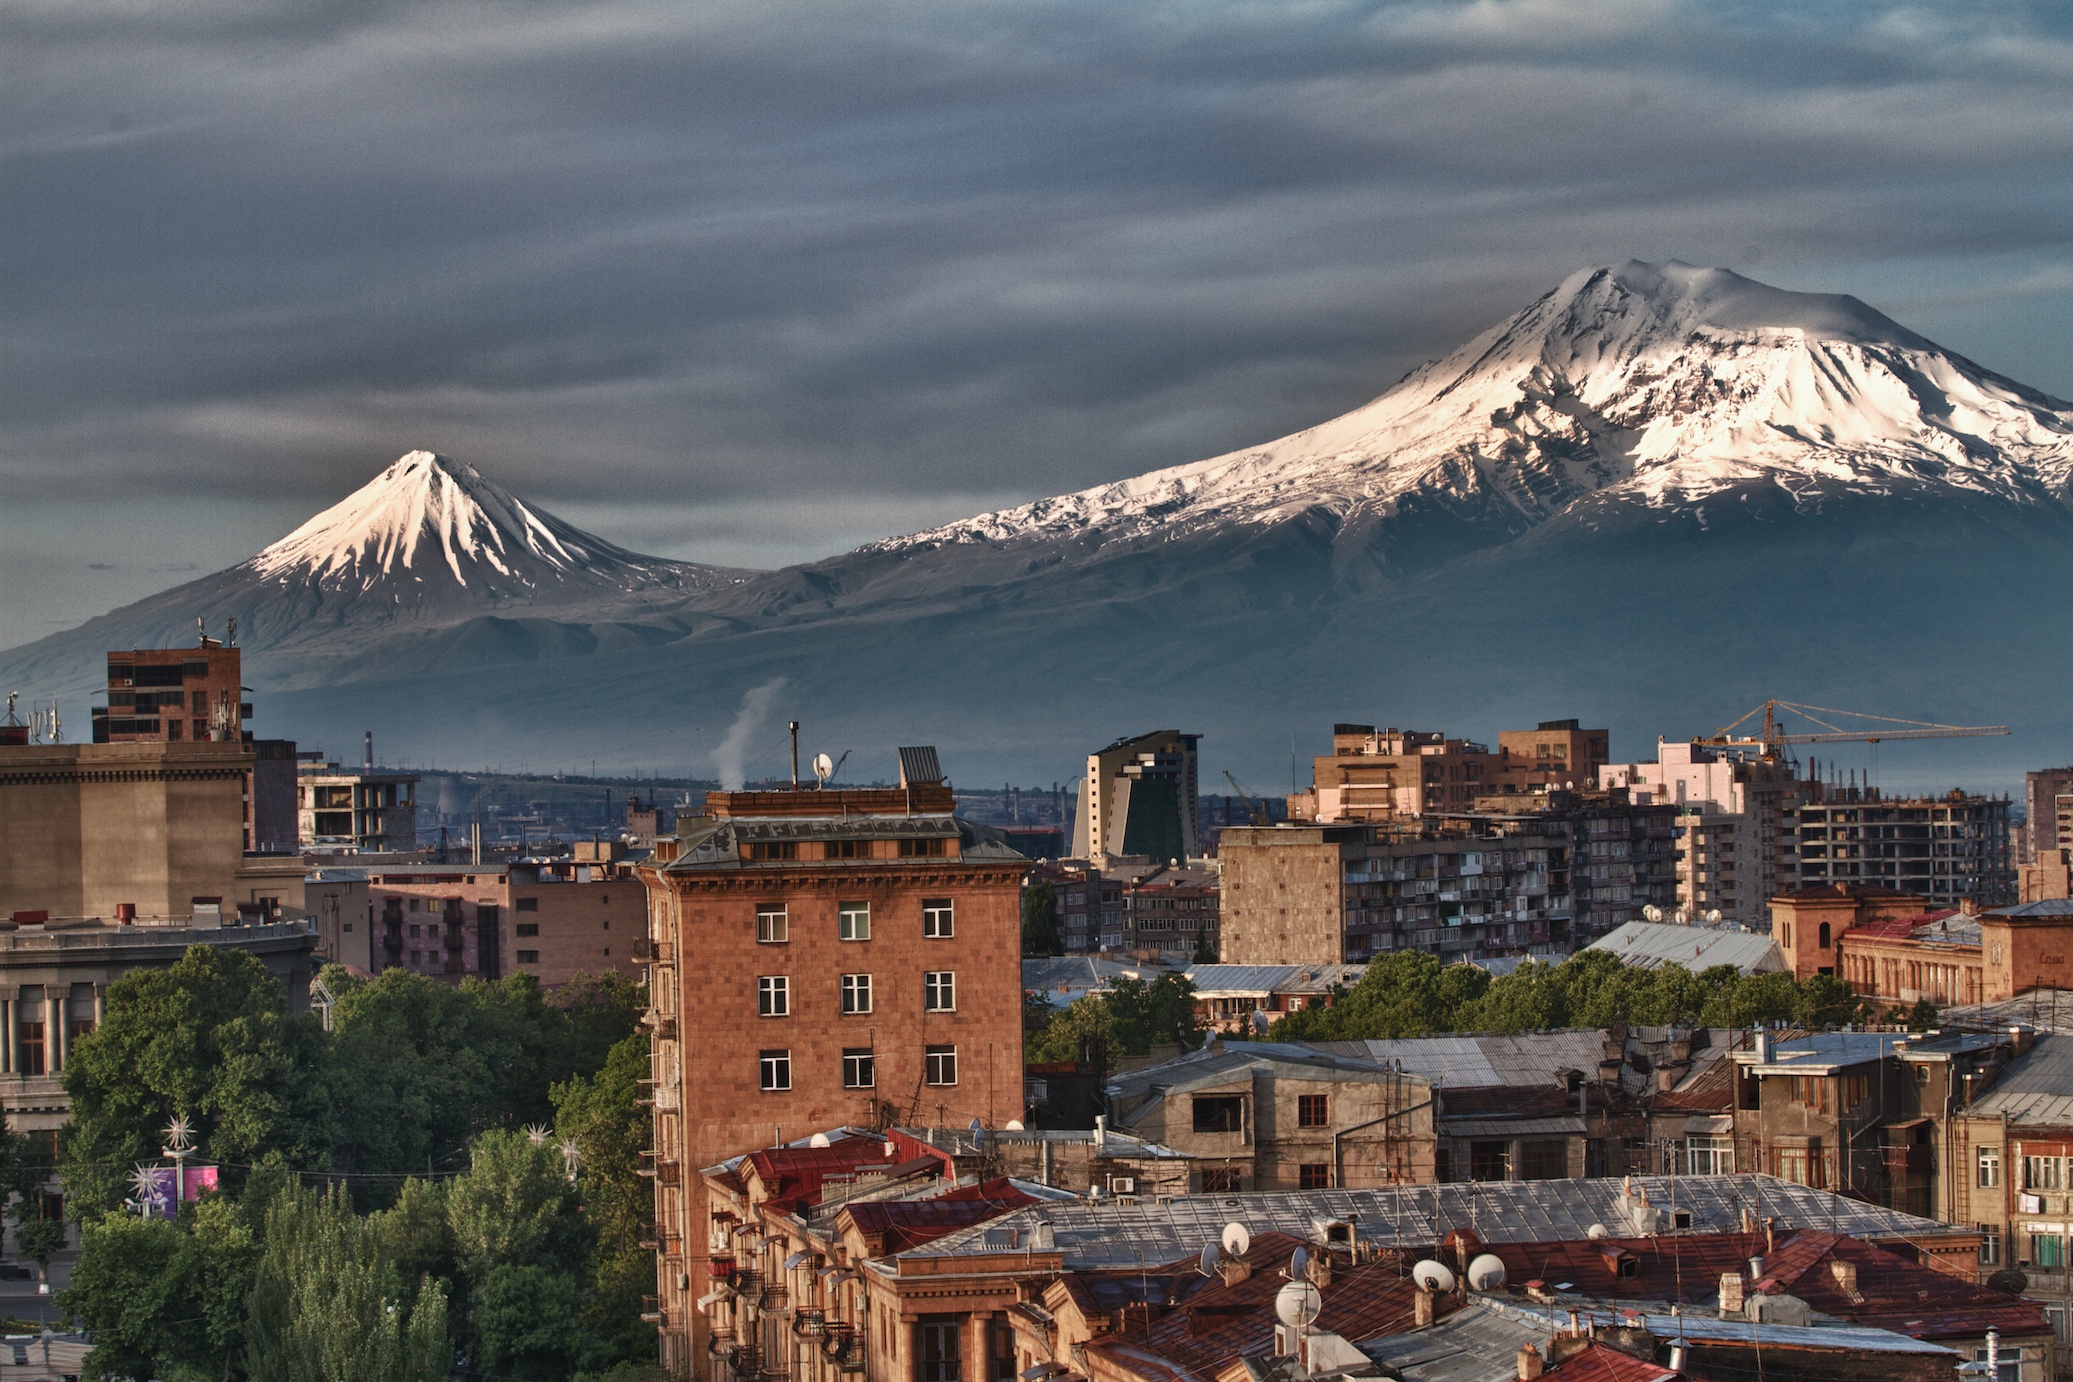 http://barevarmenia.com/travelblog/wp-content/uploads/2012/04/Mount-Ararat-Yerevan-Cascade.jpg